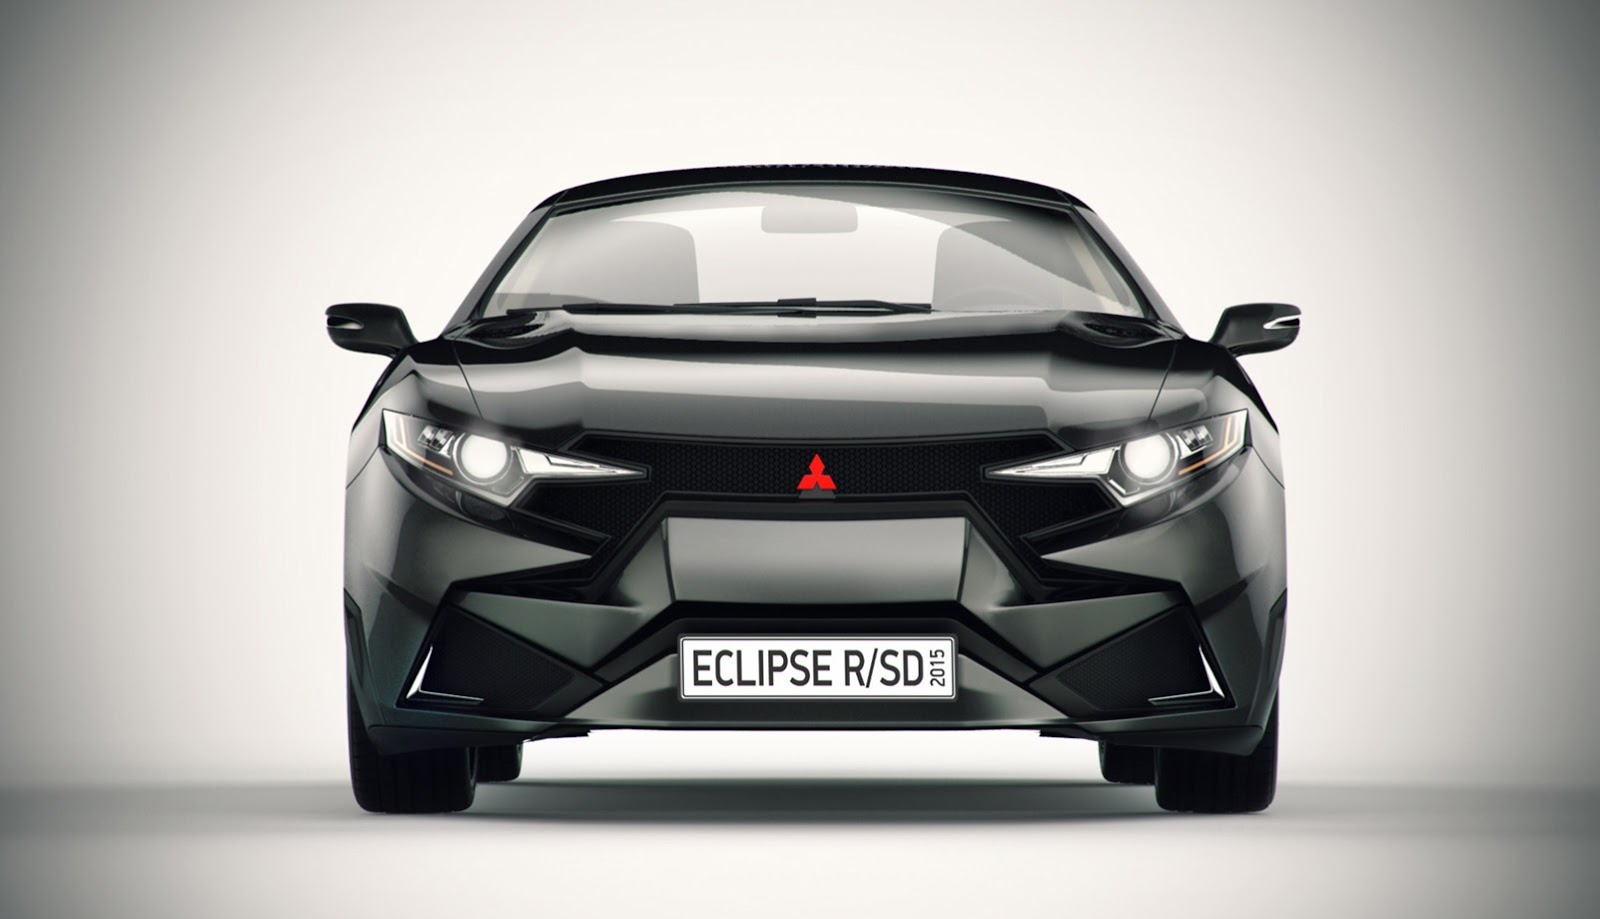 International, Mitsubishi Eclipse 2015 konsep: Mitsubishi Eclipse 2015 Concept Tampil Lebih Sangar [with Video]